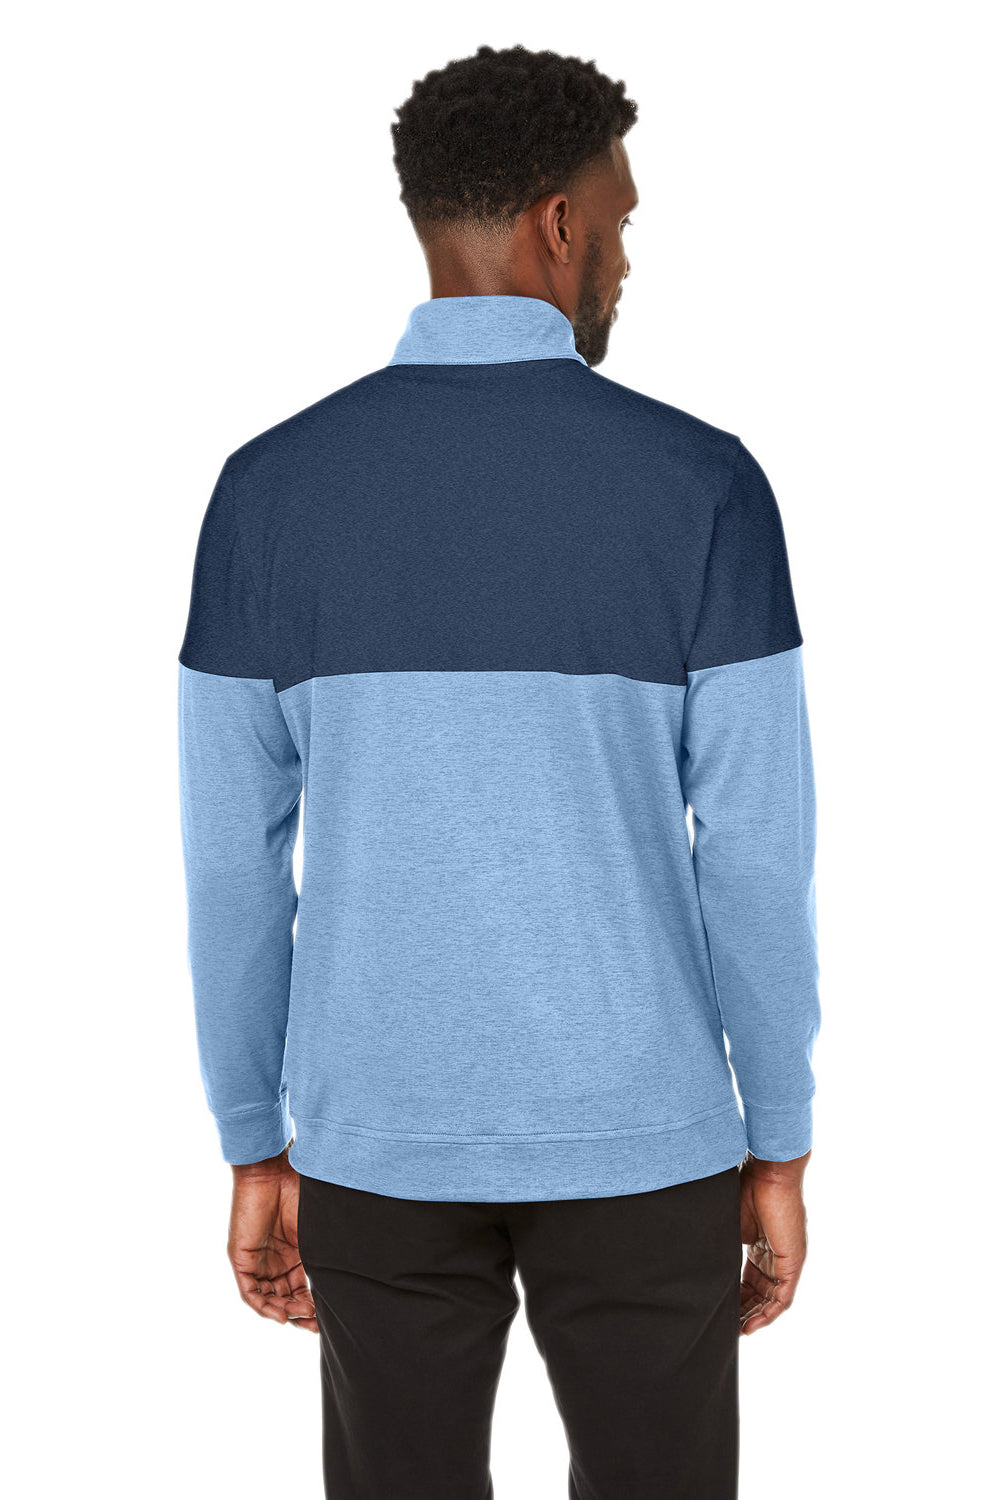 Puma 595803 Mens Cloudspun Warm Up 1/4 Zip Sweatshirt Bell Blue/Dark Denim Blue Back